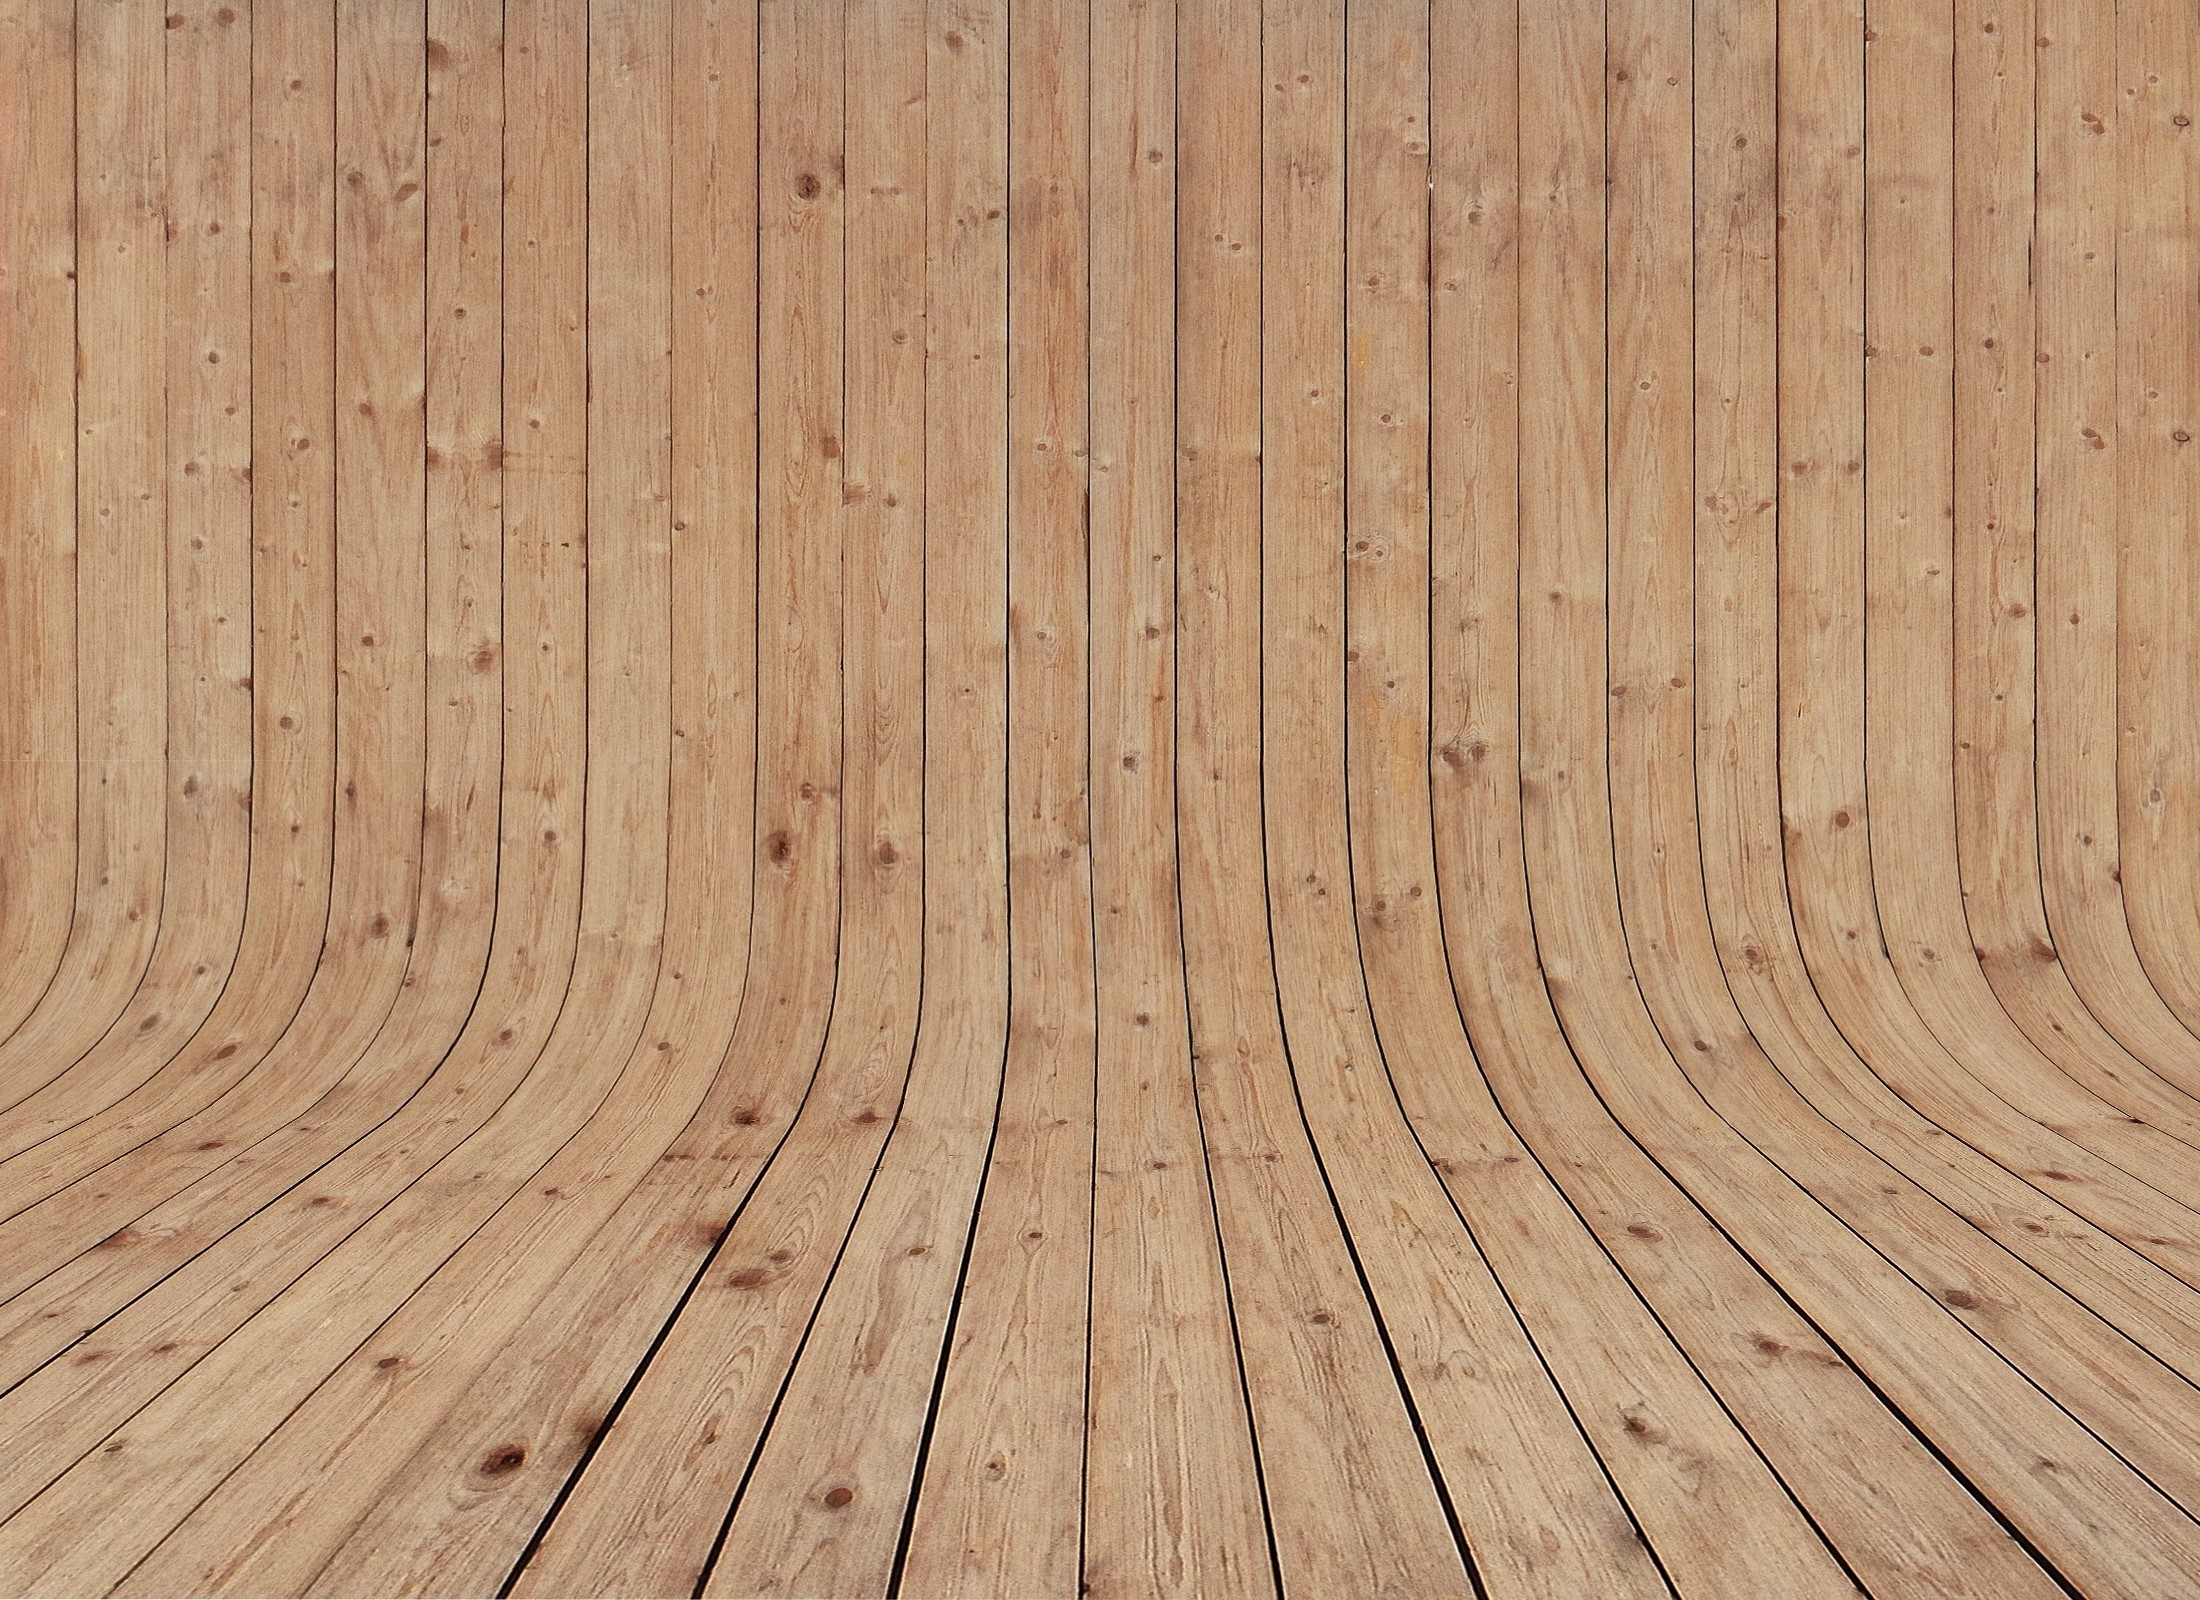 Wholesale Ipe Wood Decking - Fine Lumber & Hardwoods from 